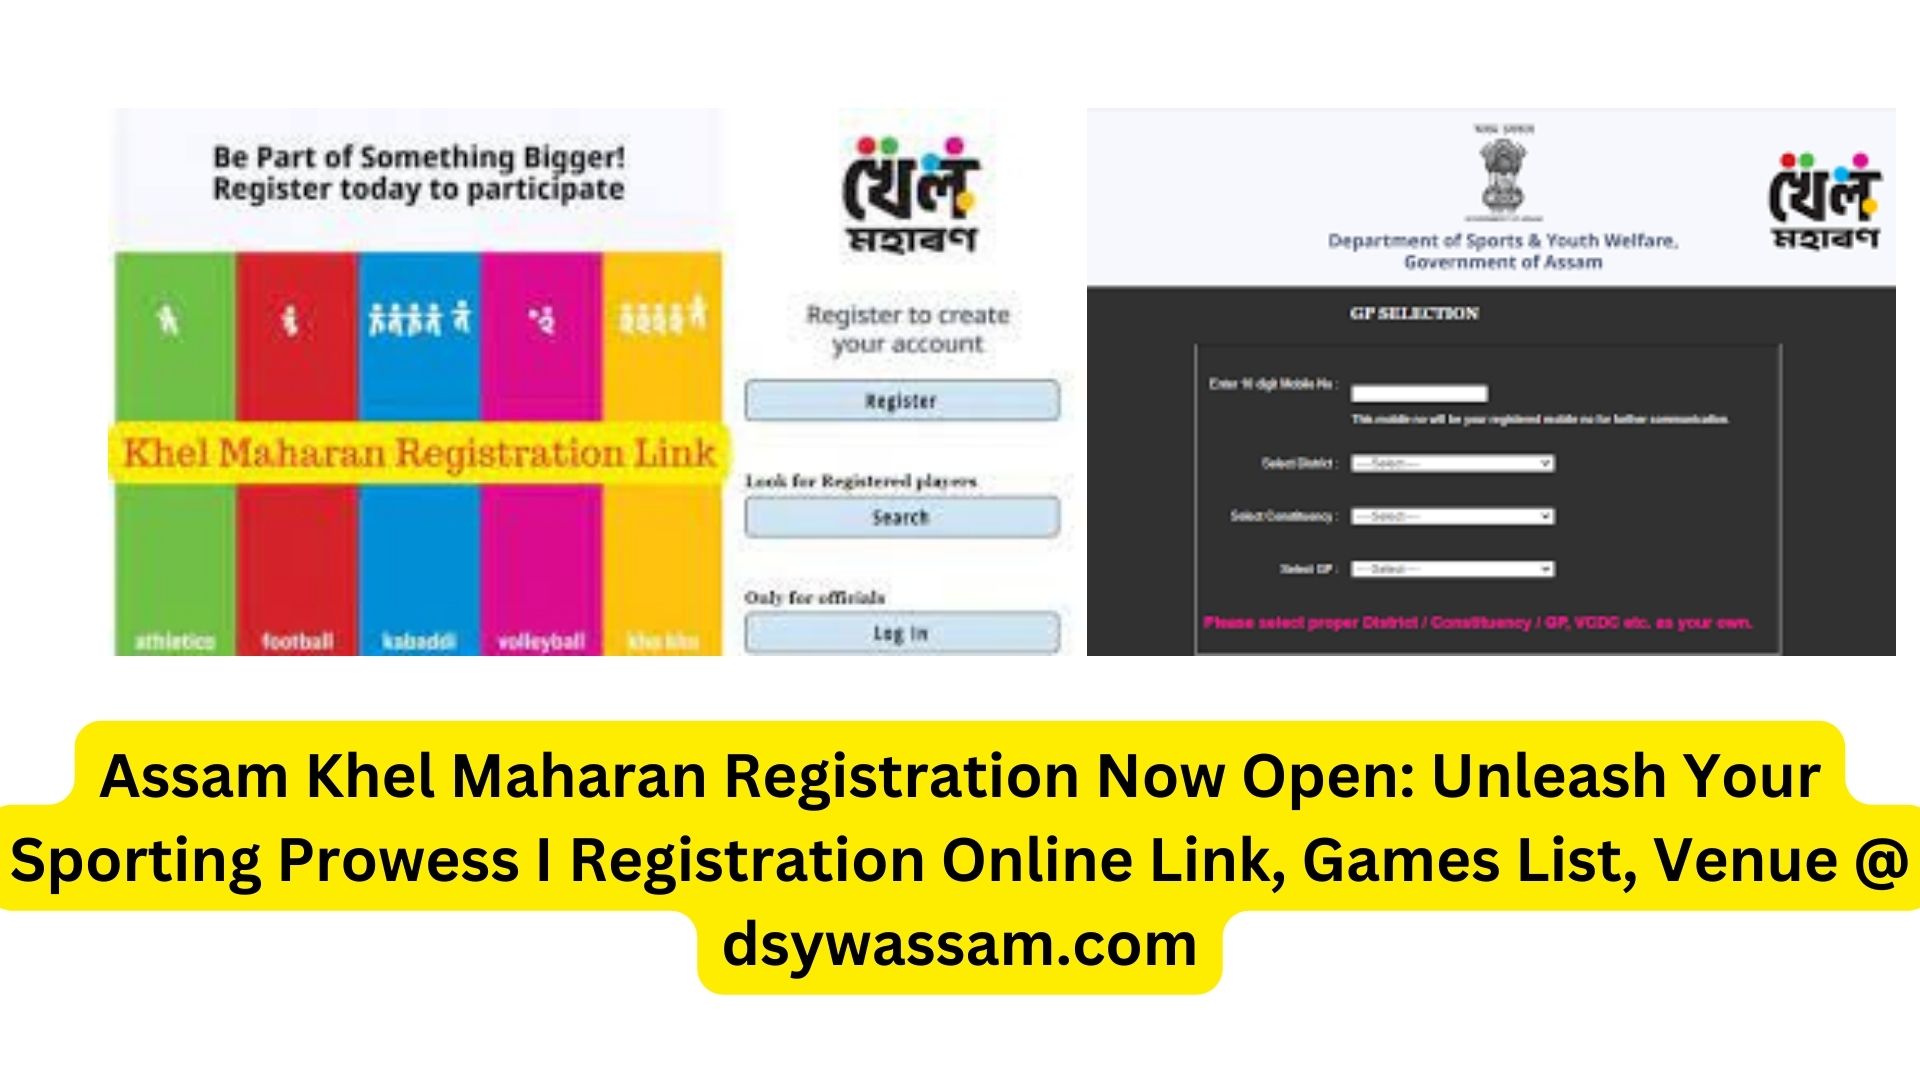 Assam Khel Maharan Registration Now Open: Unleash Your Sporting Prowess I Registration Online Link, Games List, Venue @ dsywassam.com